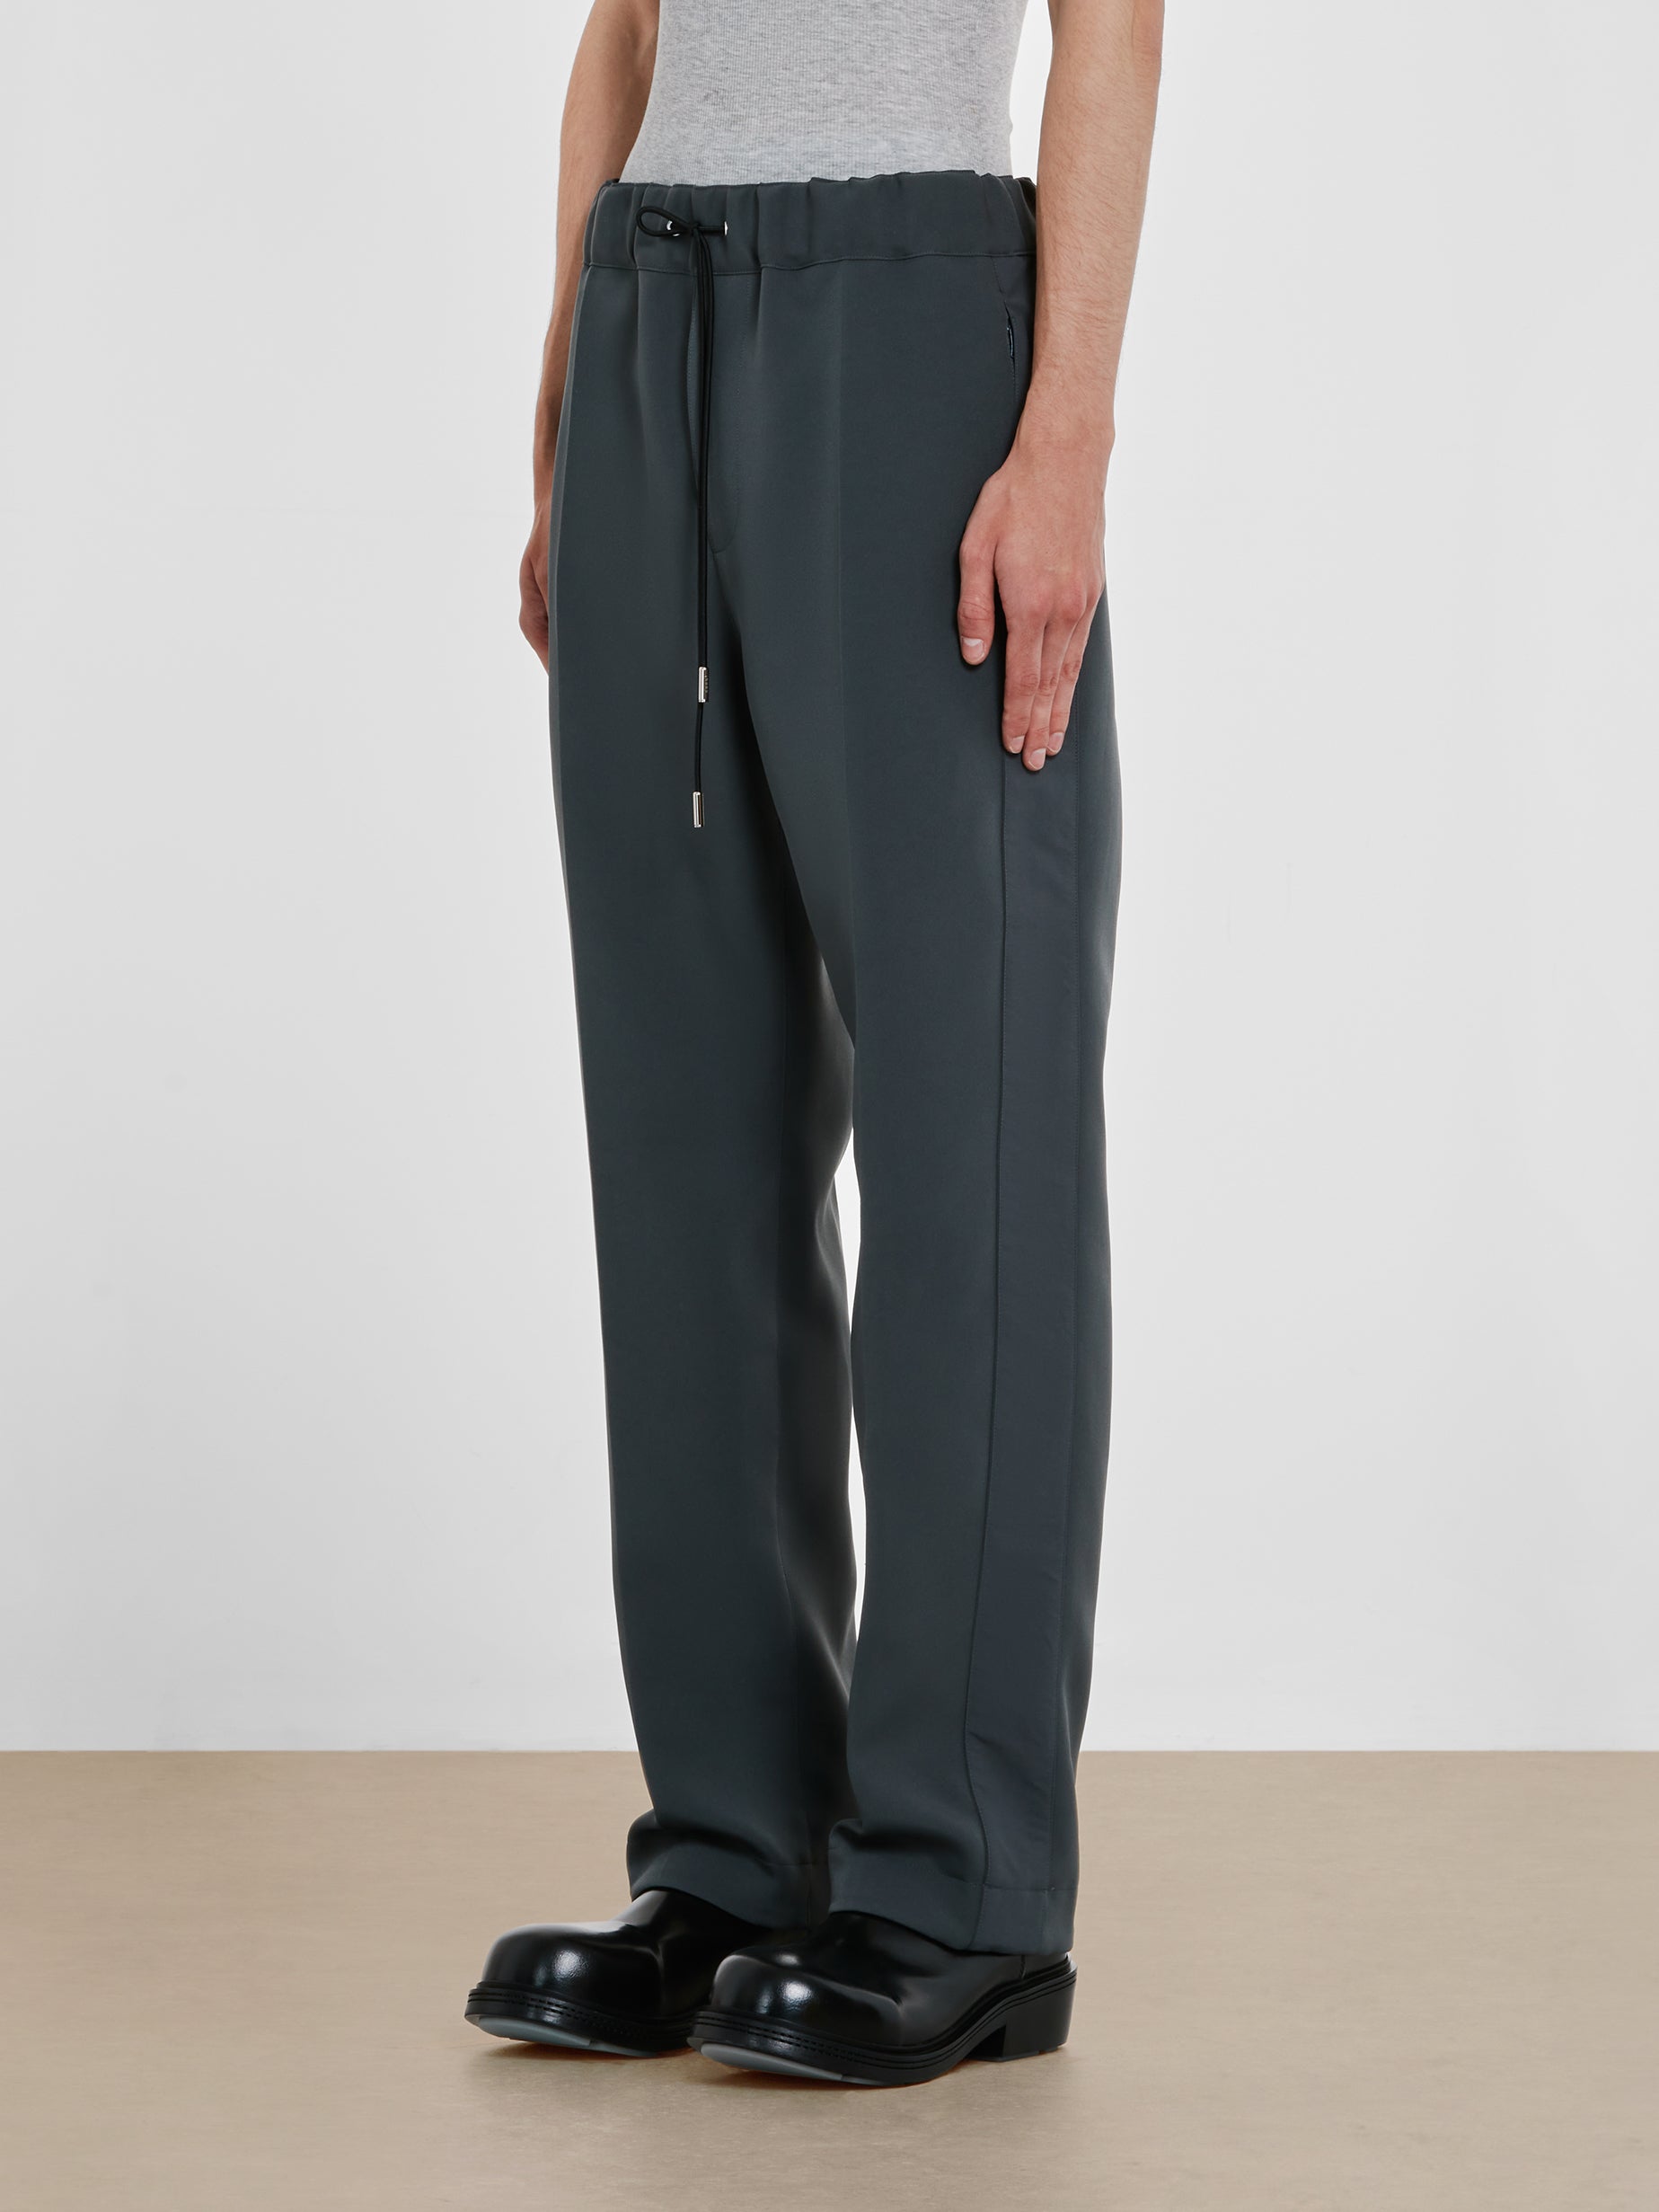 sacai - Men’s Technical Jersey Pants - (Charcoal) view 2